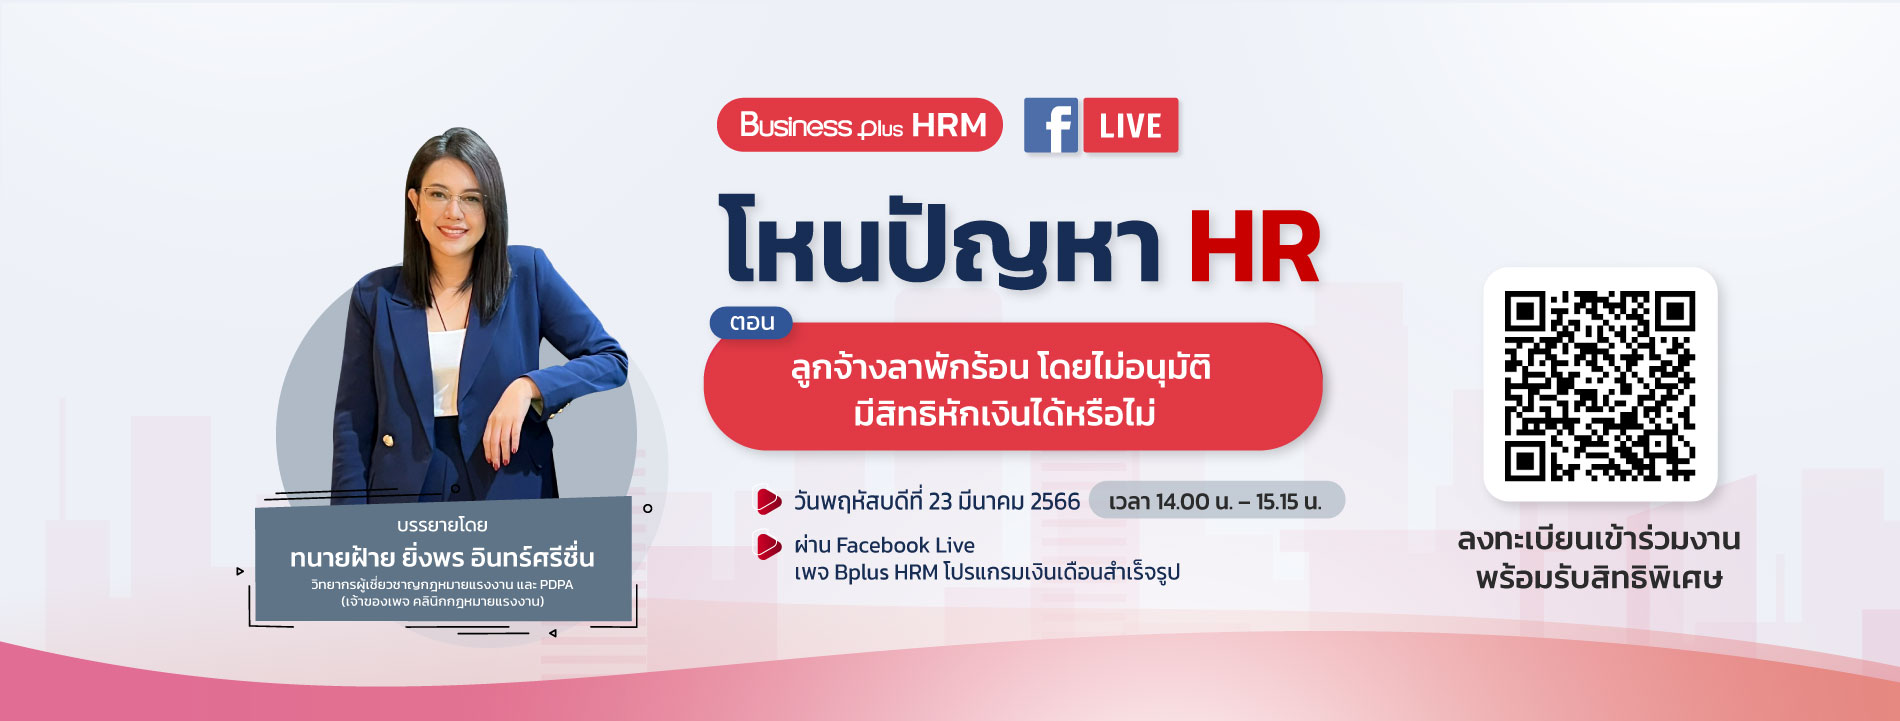 web-Business-Plus-HRM-4.jpg